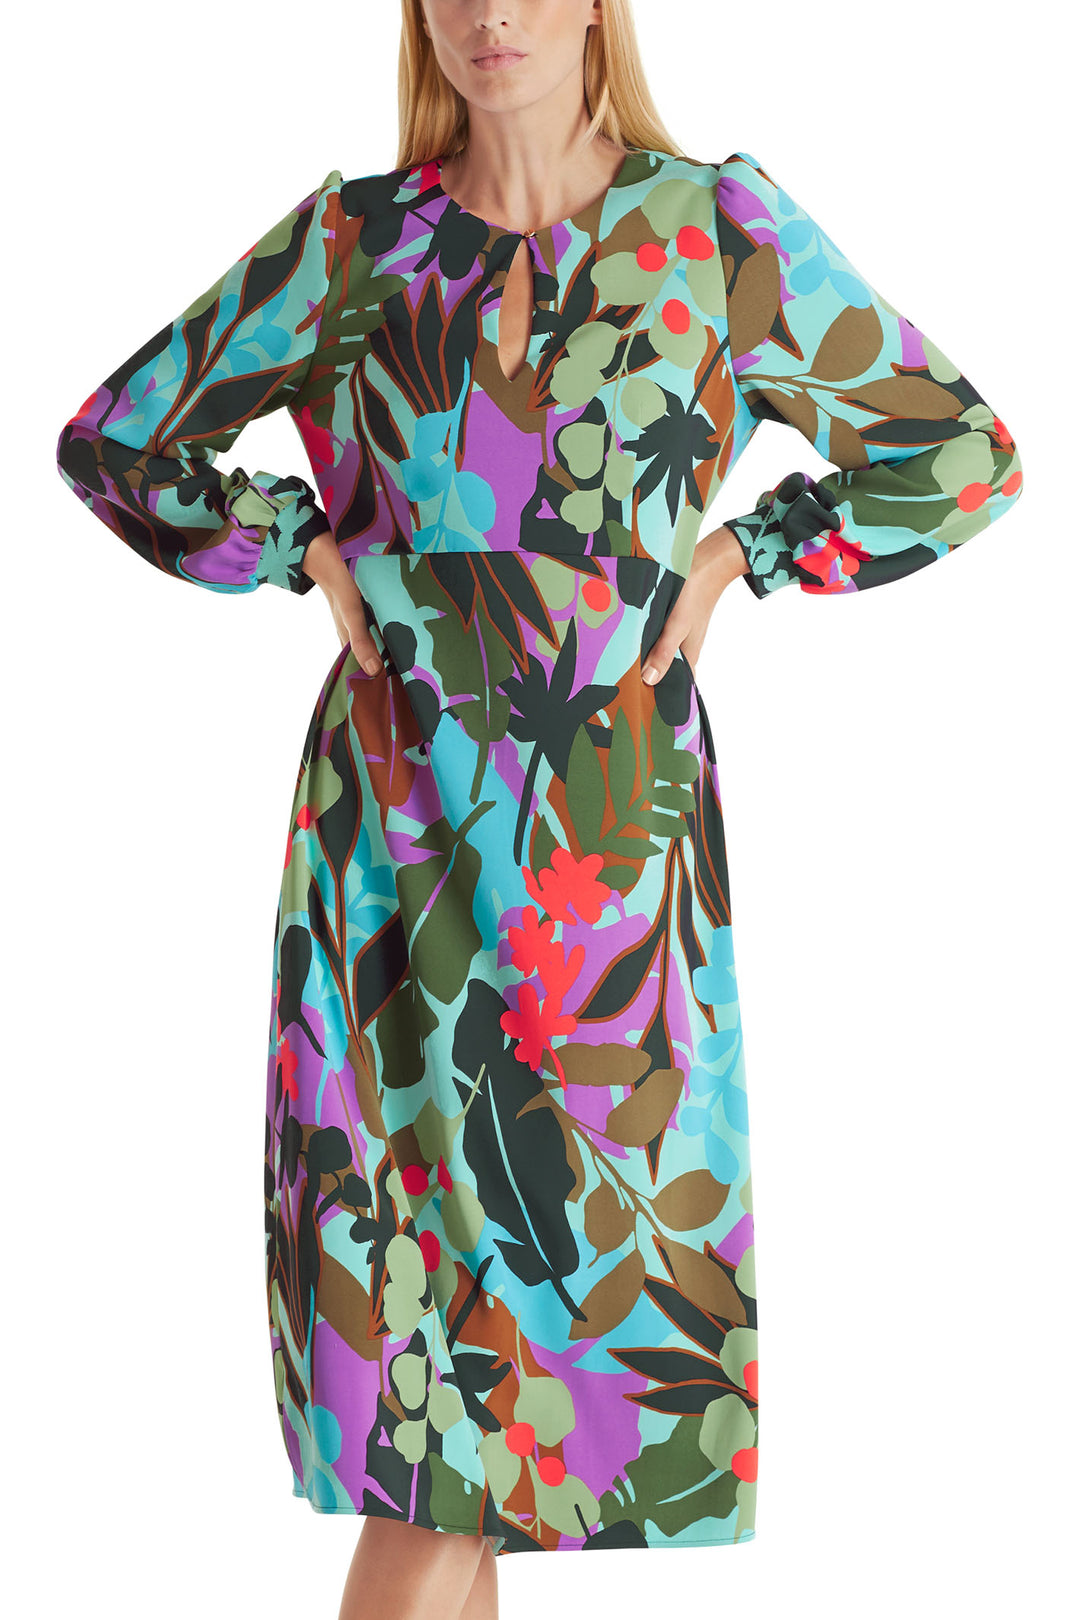 Marc Cain Collection WC 21.06 W02 562 Soft Malachite Green Print Dress - Olivia Grace Fashion